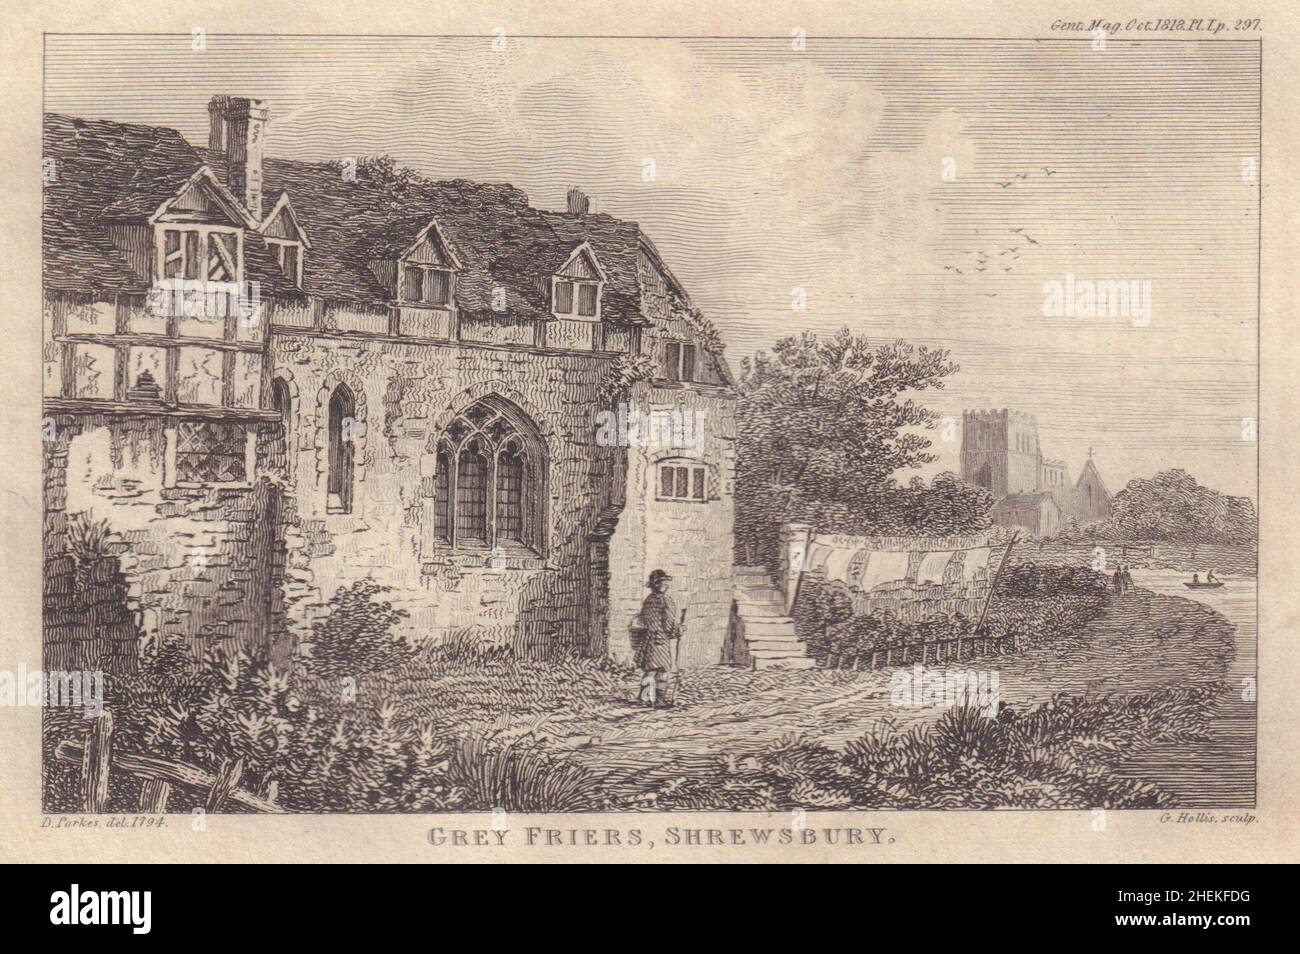 South view of the remains of the Greyfriars, Shrewsbury, Shropshire 1818 print Stock Photo